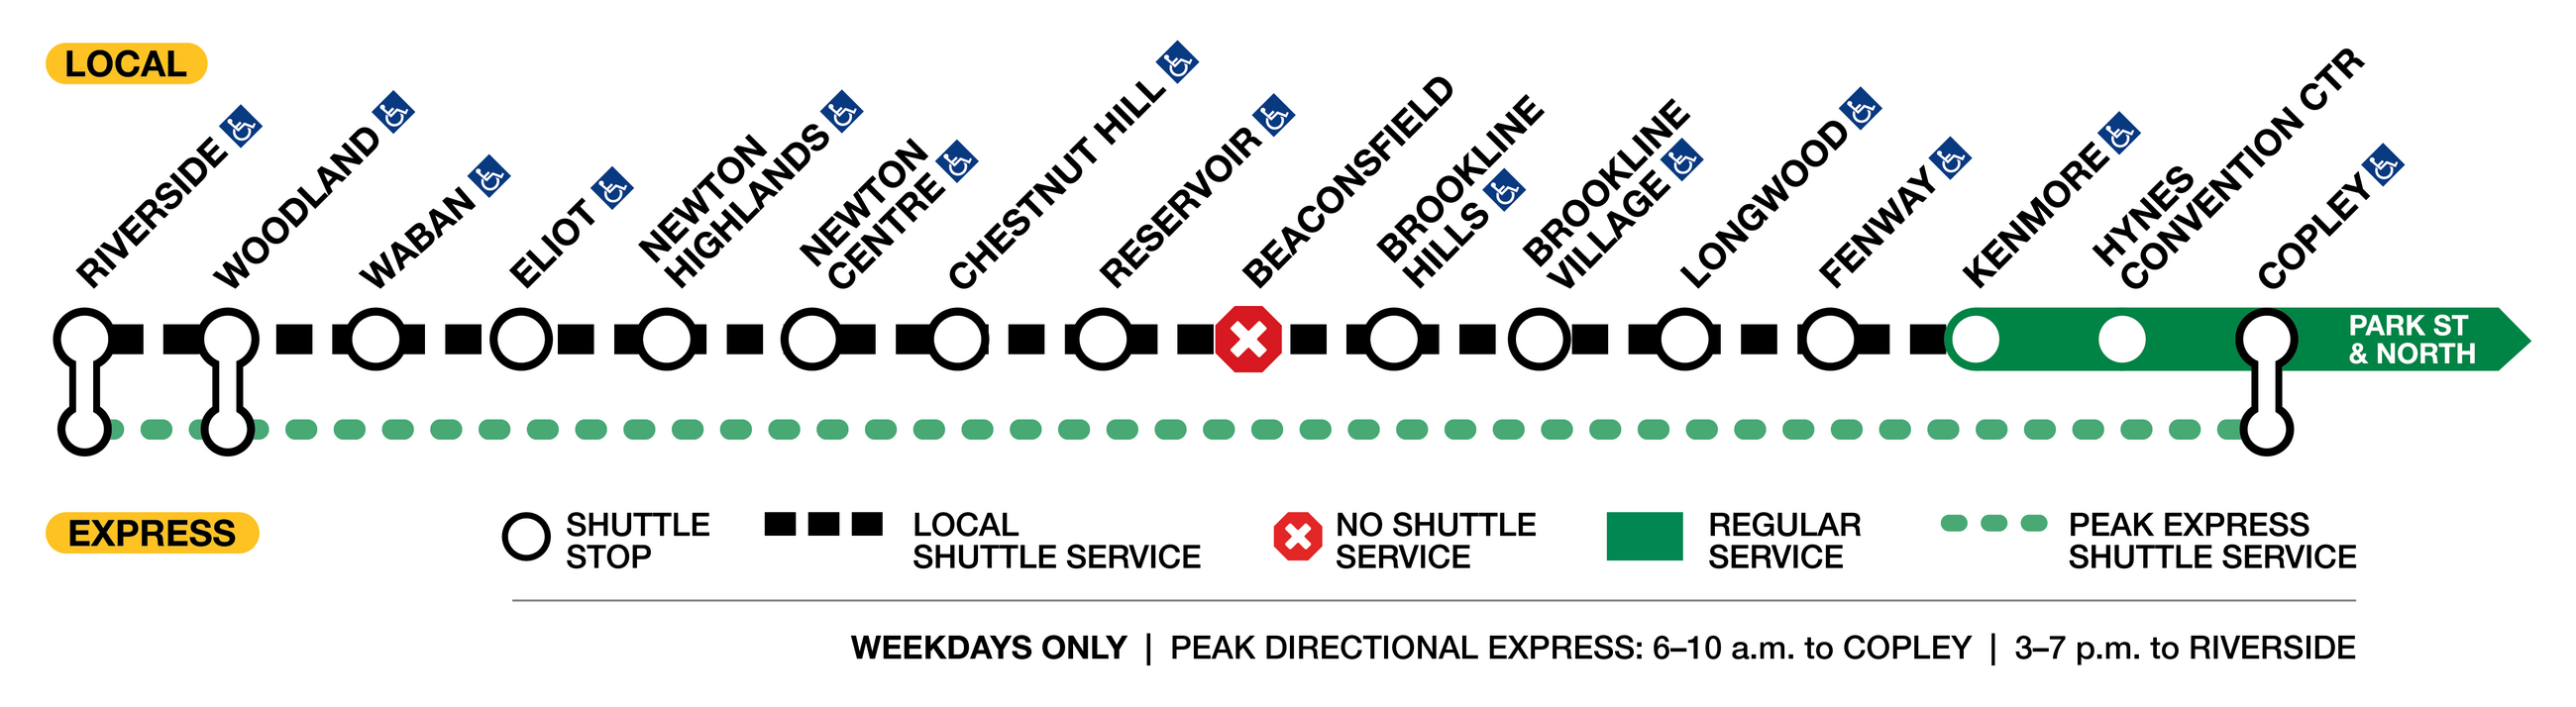 diagram showing shuttle stops for GLD diversion